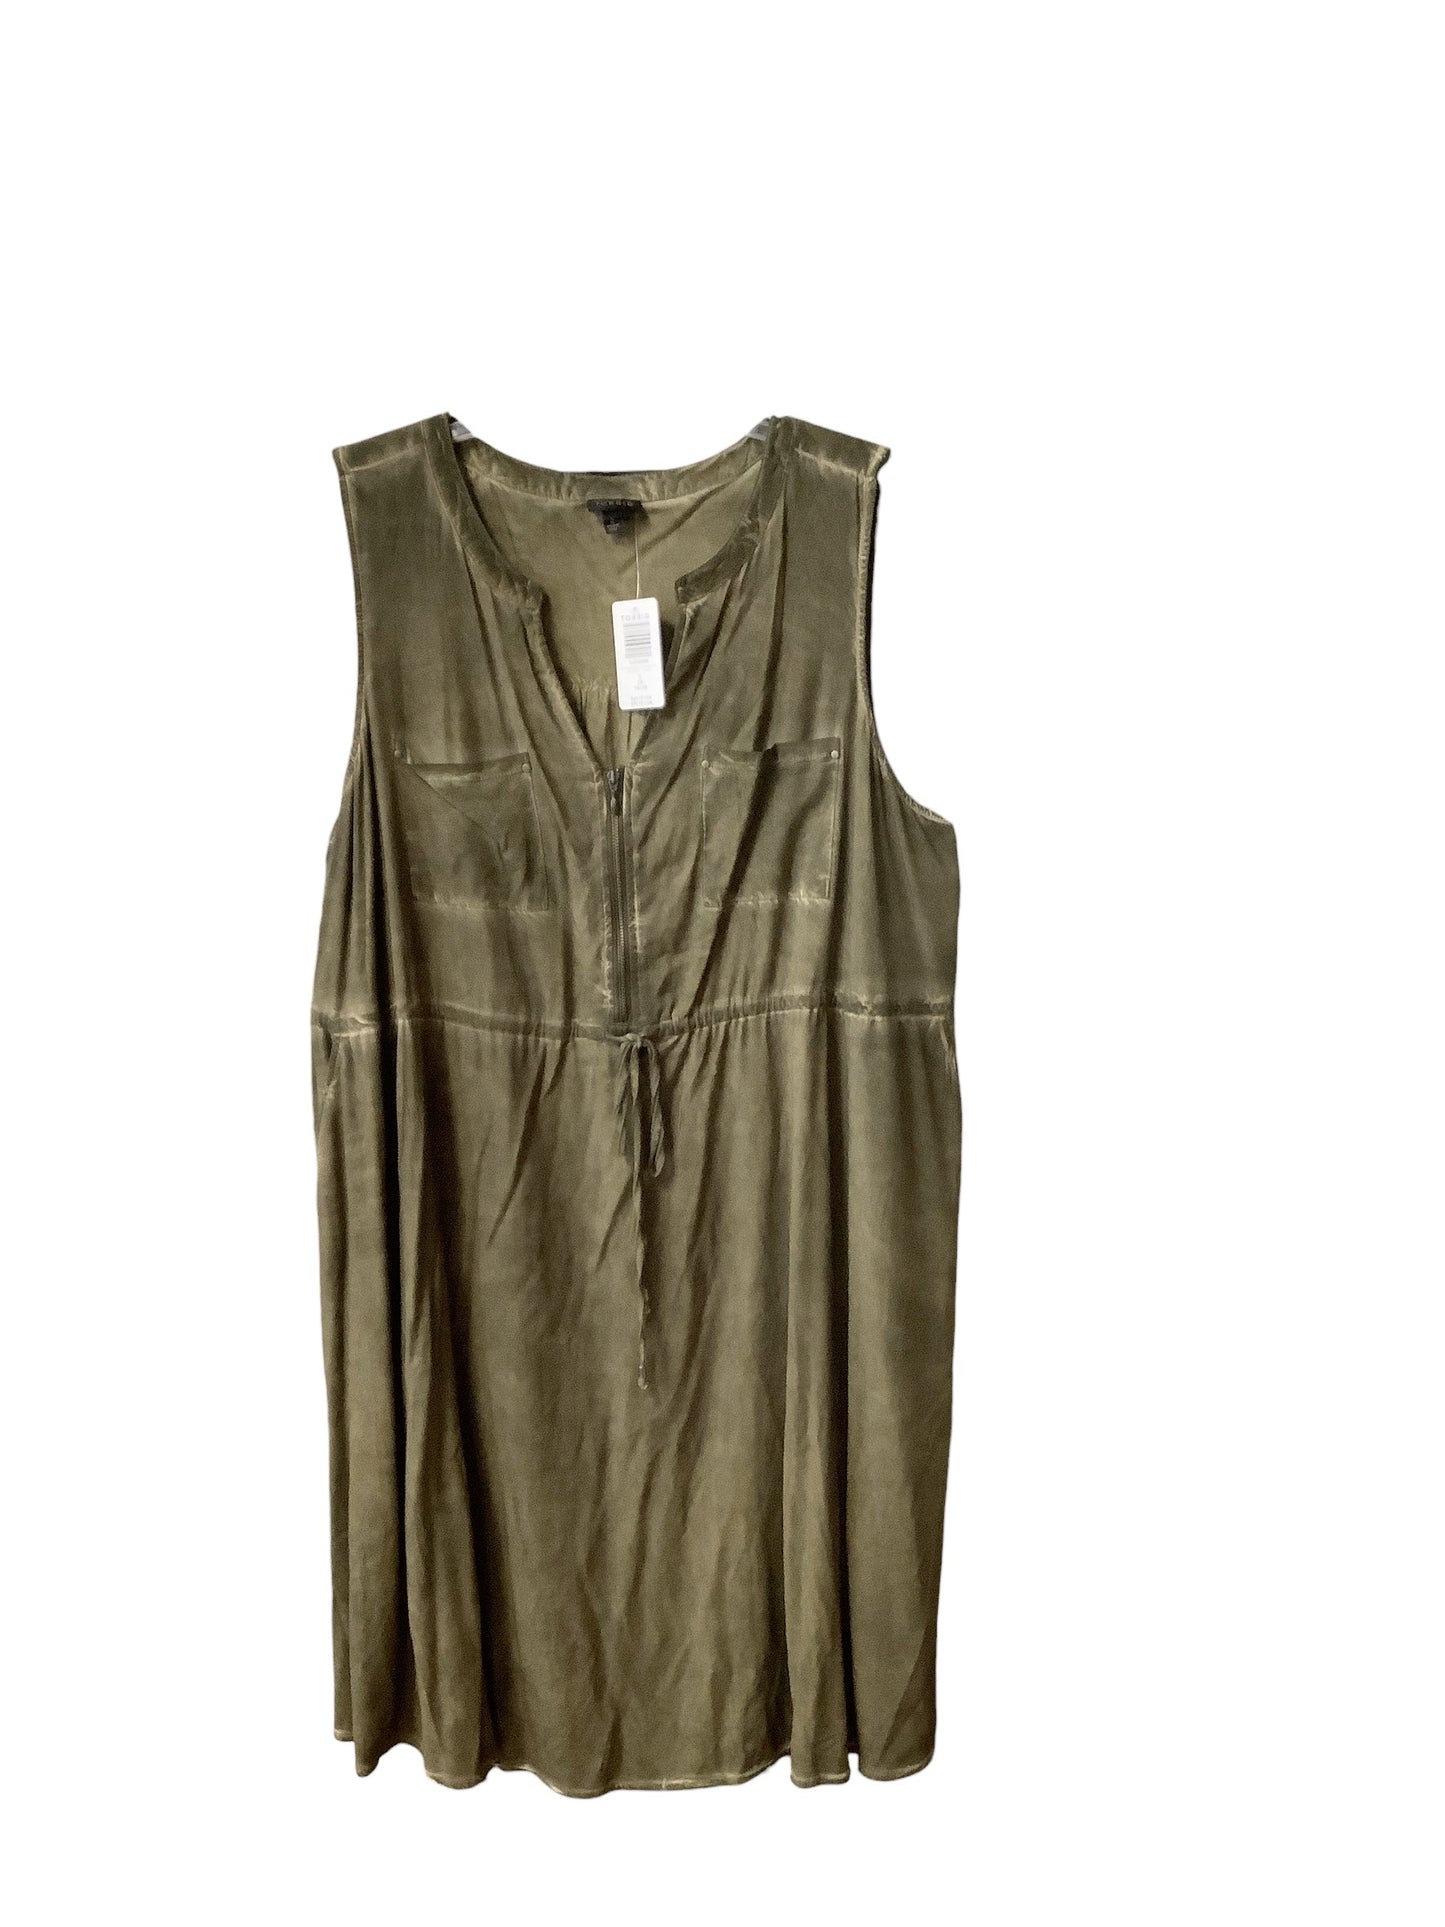 Green Dress Casual Short Torrid, Size 1x